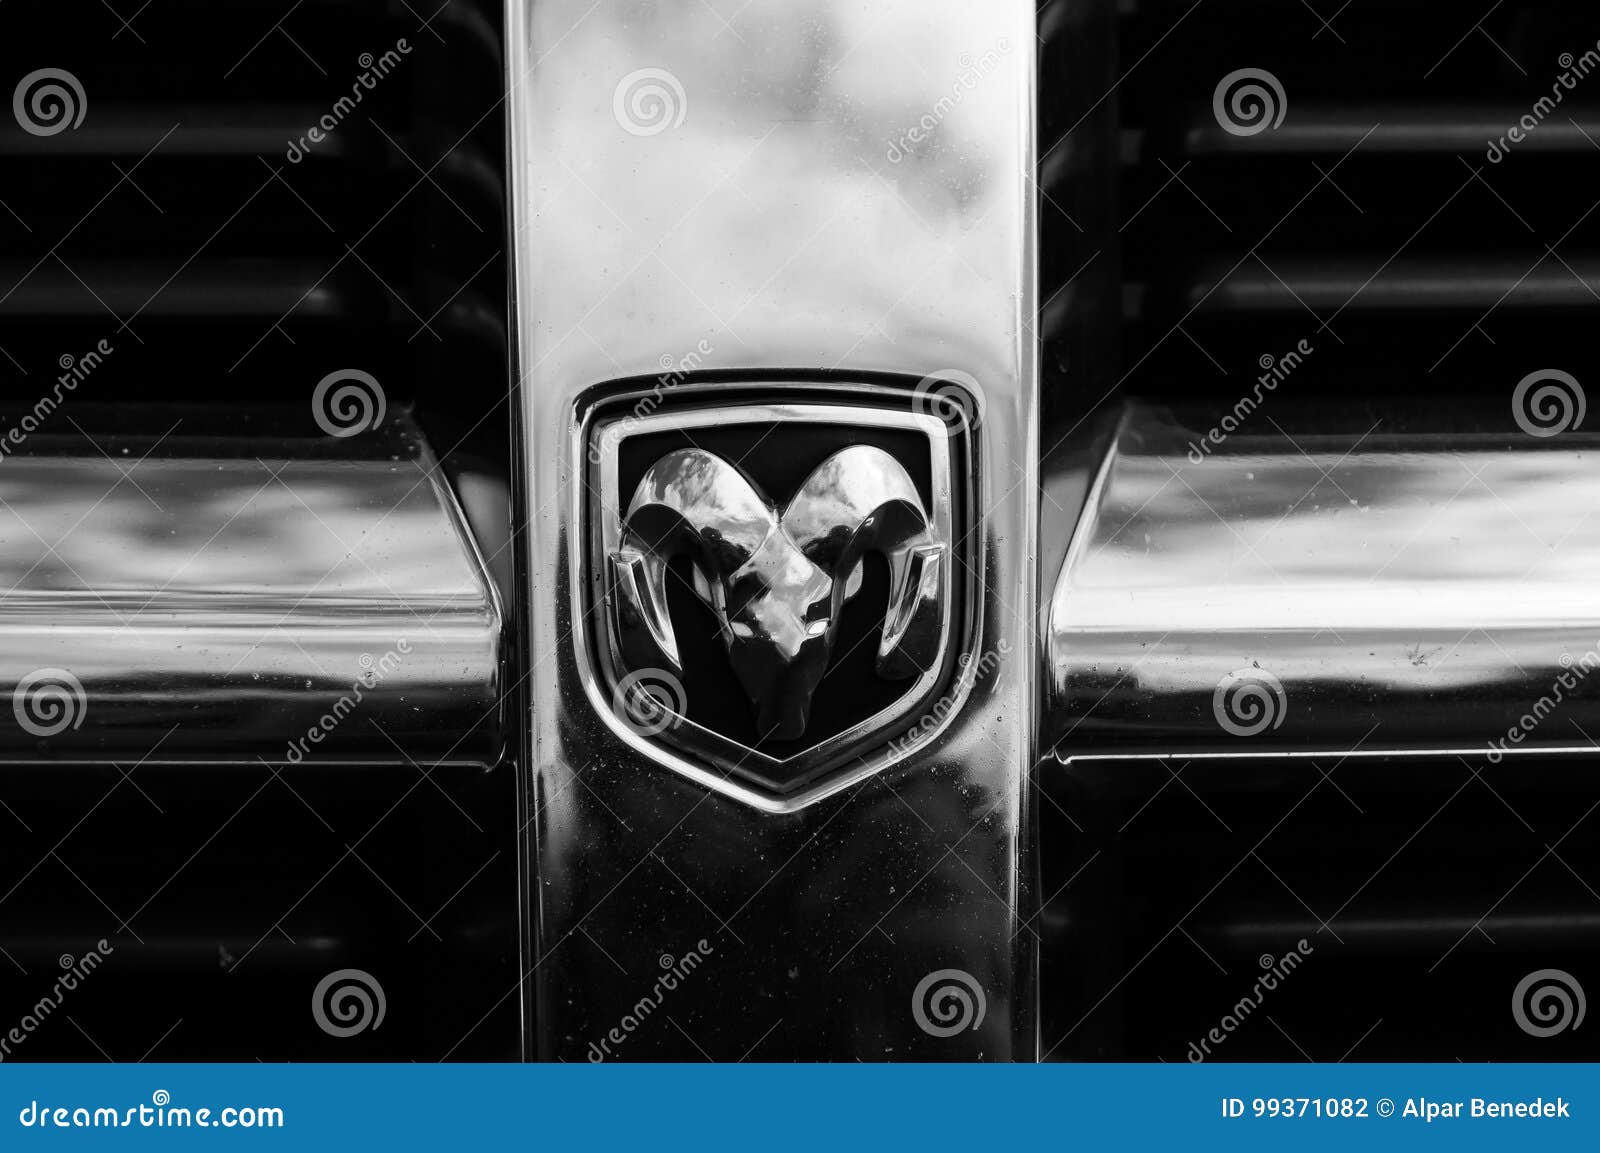 Dodge Viper steel wall 4  Dodge  Cars Background Wallpapers on Desktop  Nexus Image 2478940